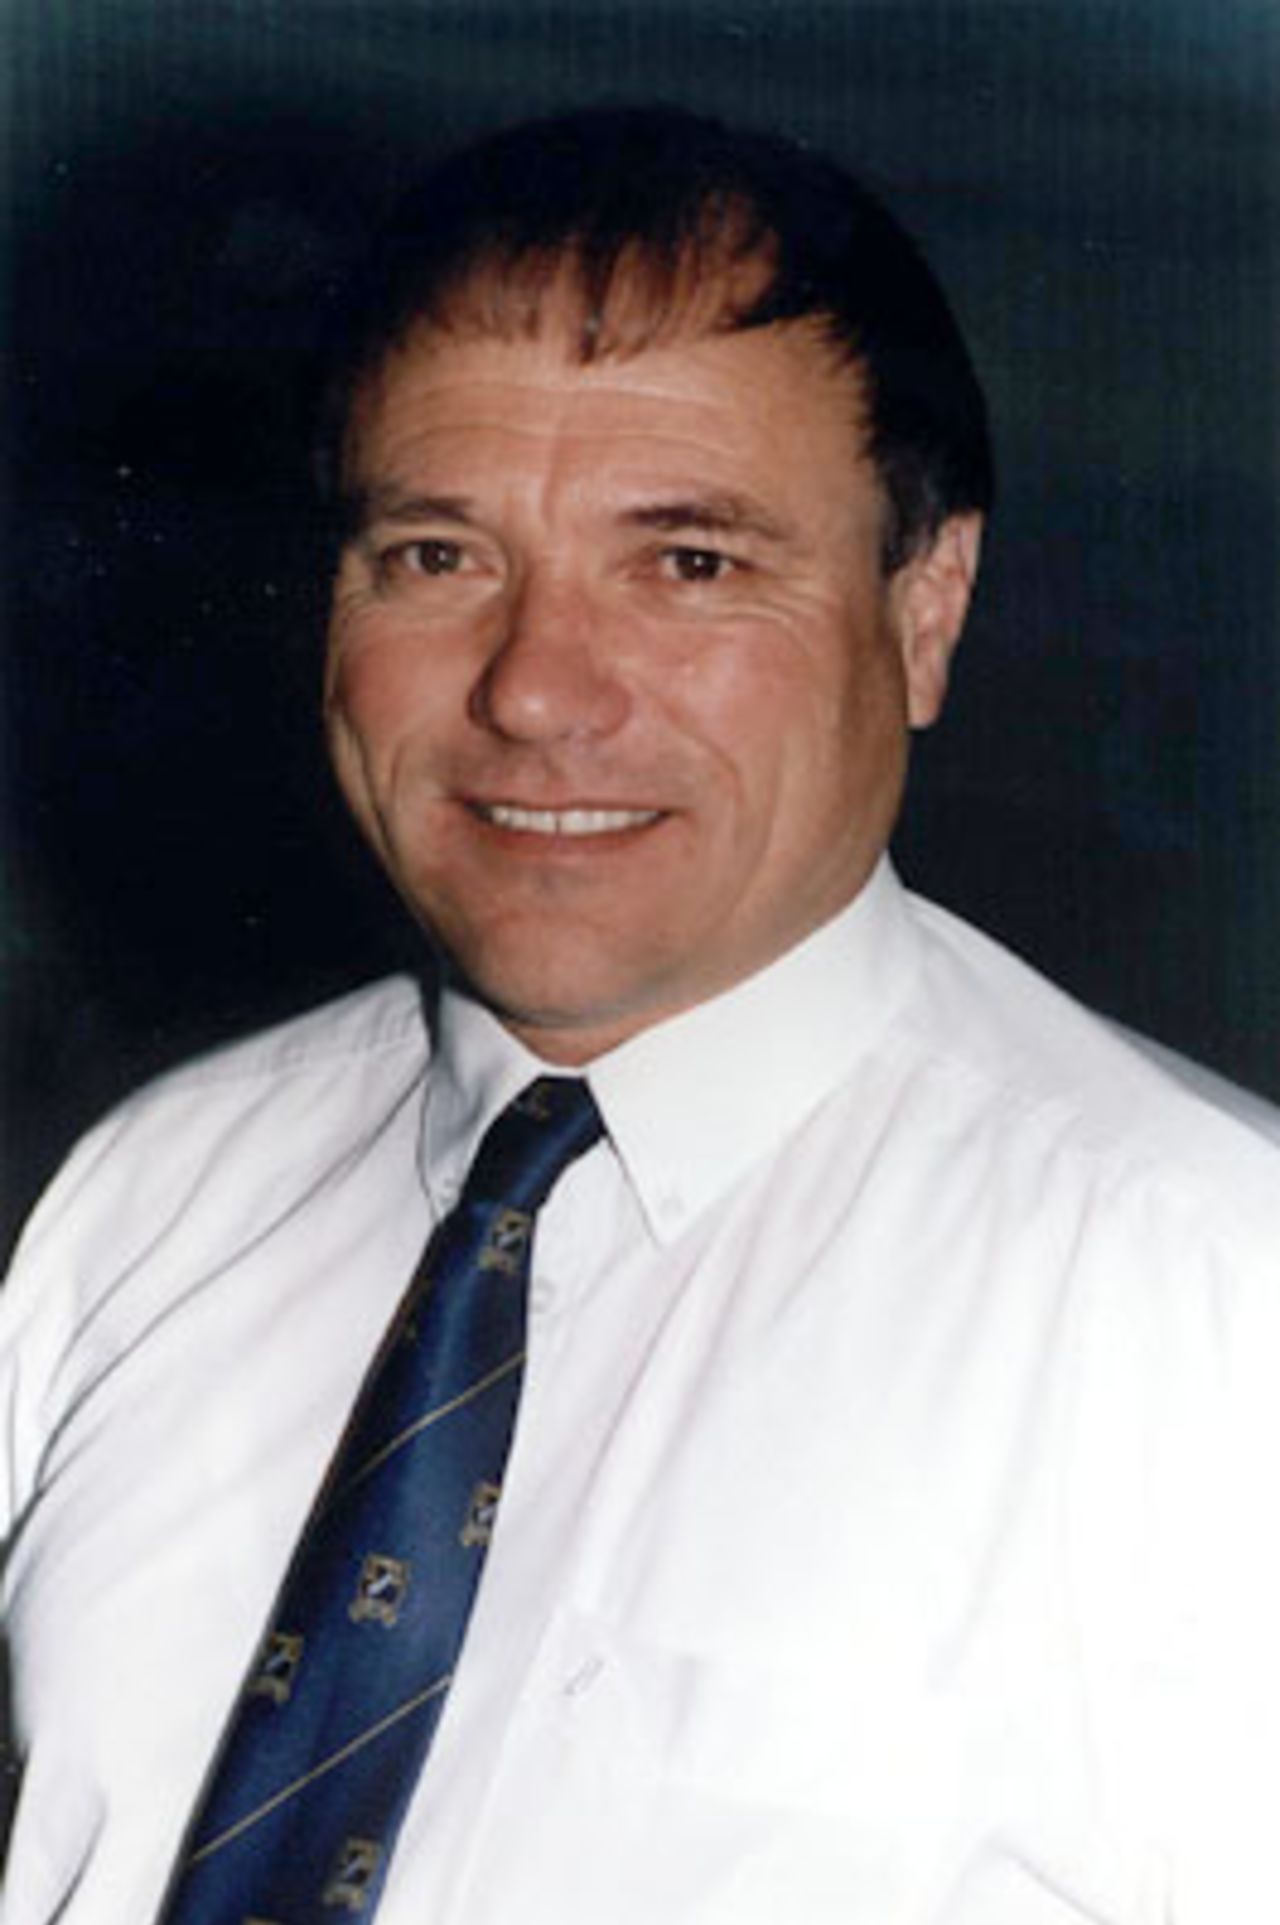 Portrait of Peter Williams - 2000/01 New Zealand Cricket reserve panel umpire